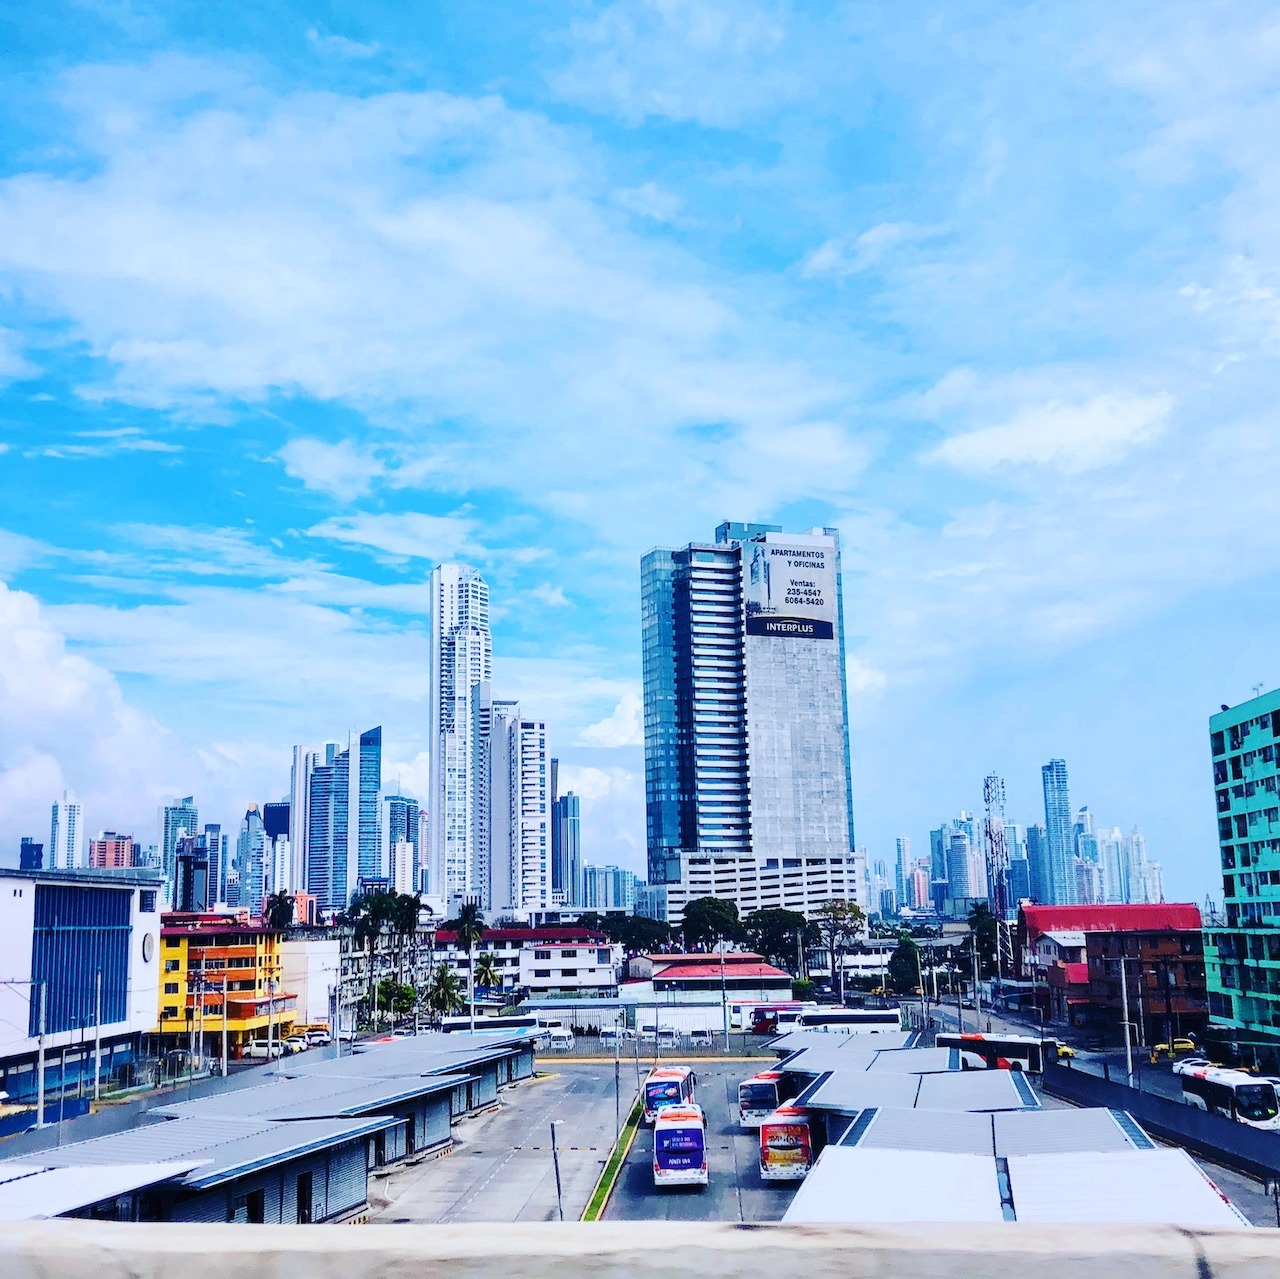 A view of Panama City